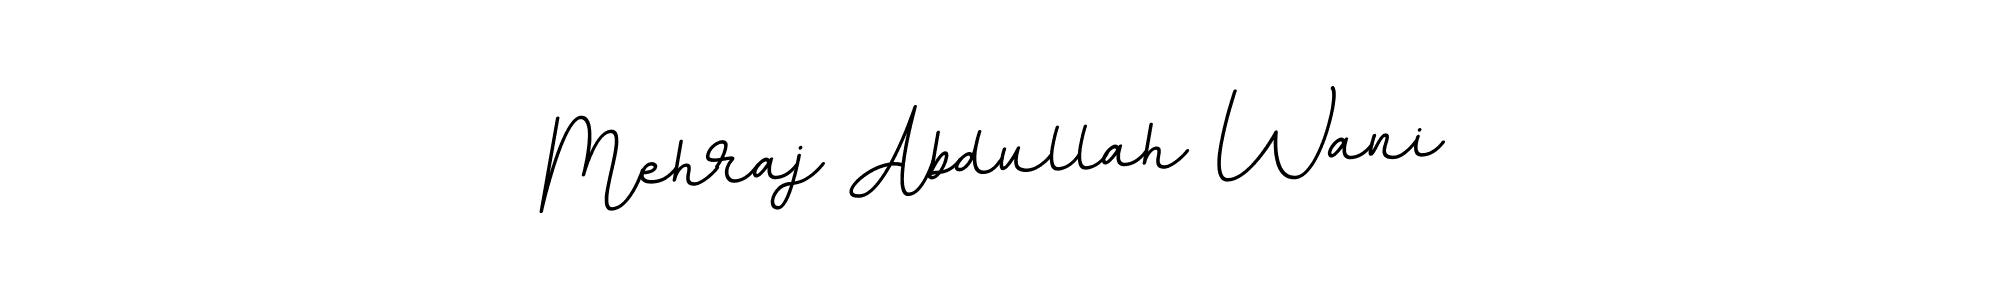 How to Draw Mehraj Abdullah Wani signature style? BallpointsItalic-DORy9 is a latest design signature styles for name Mehraj Abdullah Wani. Mehraj Abdullah Wani signature style 11 images and pictures png